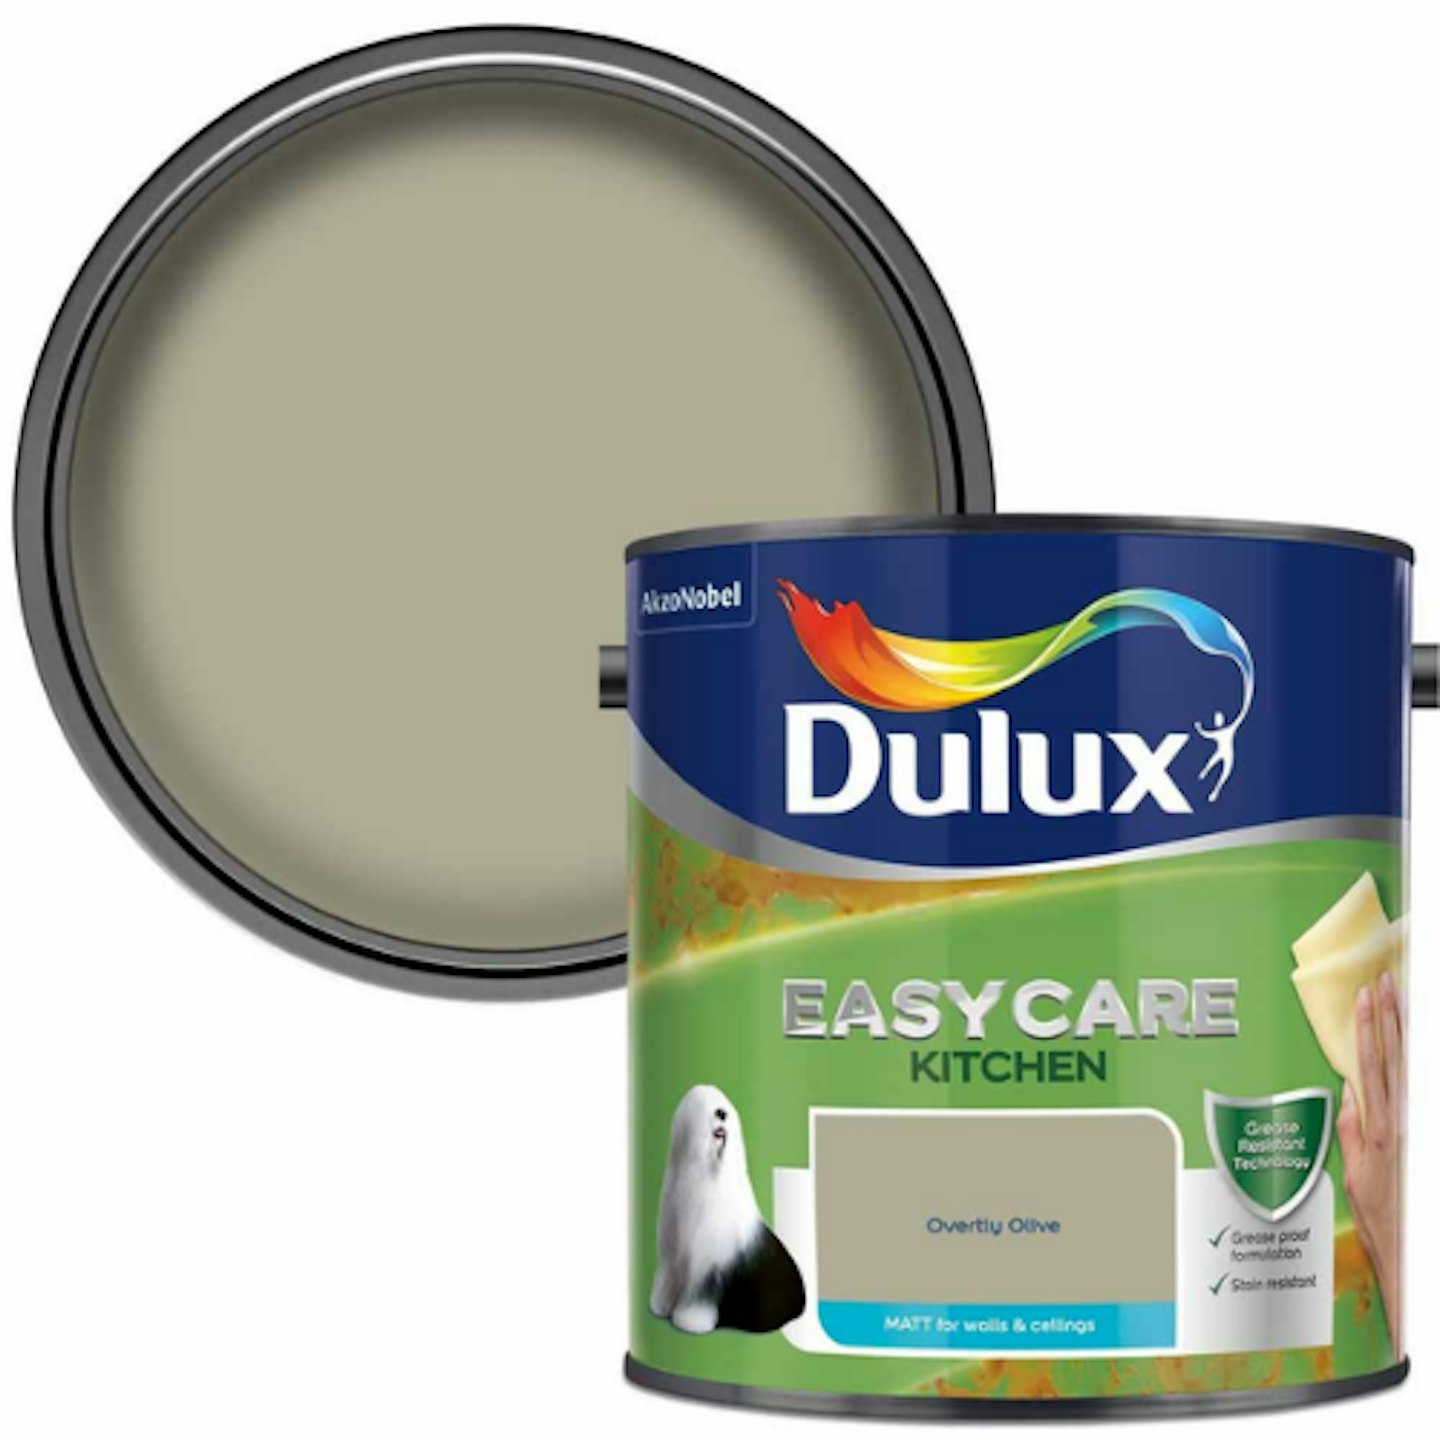 Dulux Easycare Kitchen Overtly Olive Matt Emulsion Paint, 2.5L